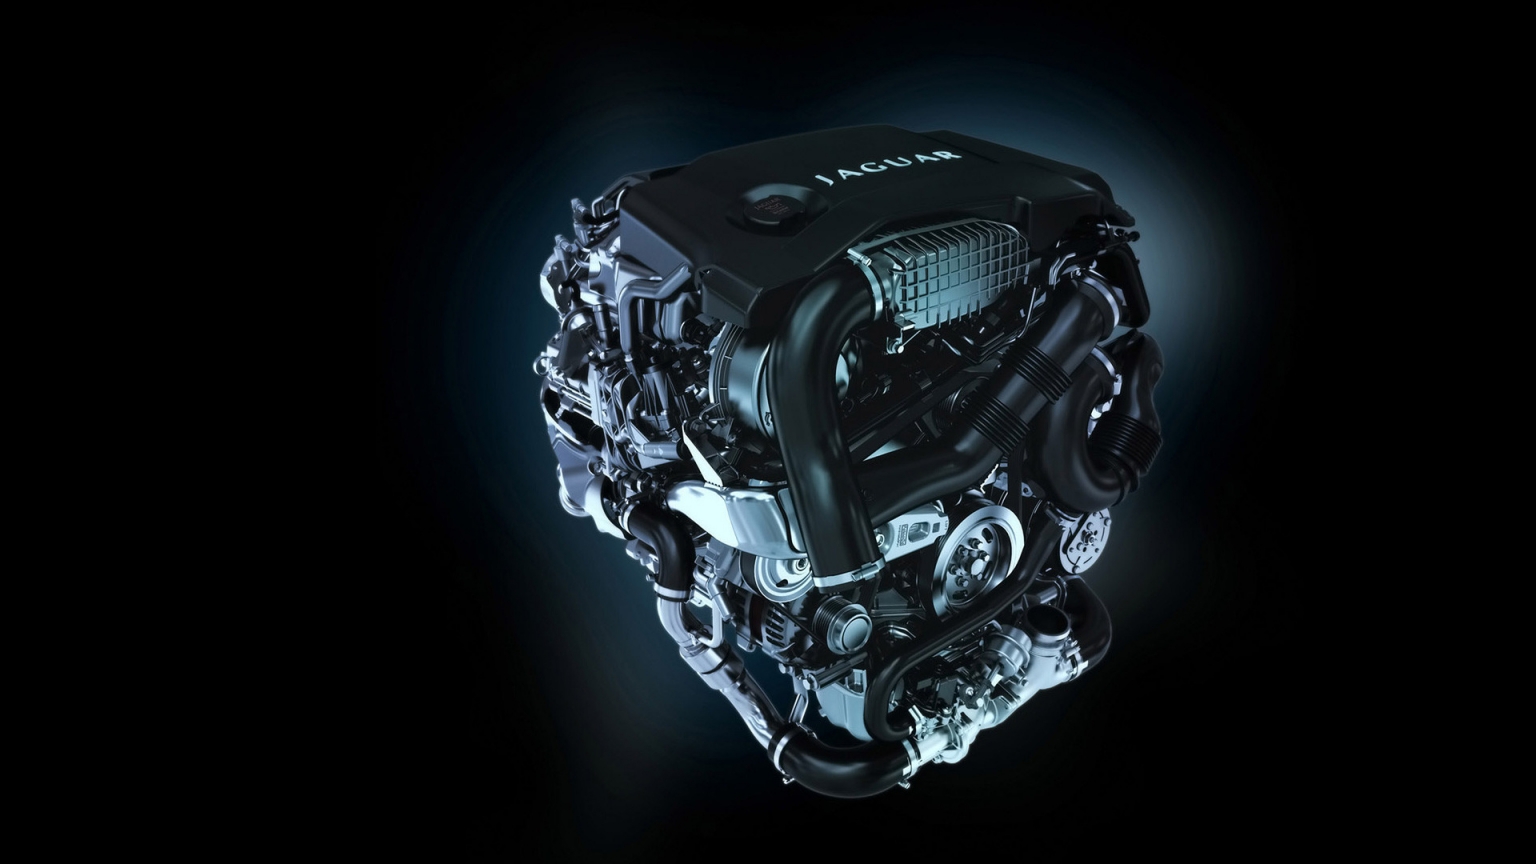 Jaguar XF Diesel S Engine for 1536 x 864 HDTV resolution